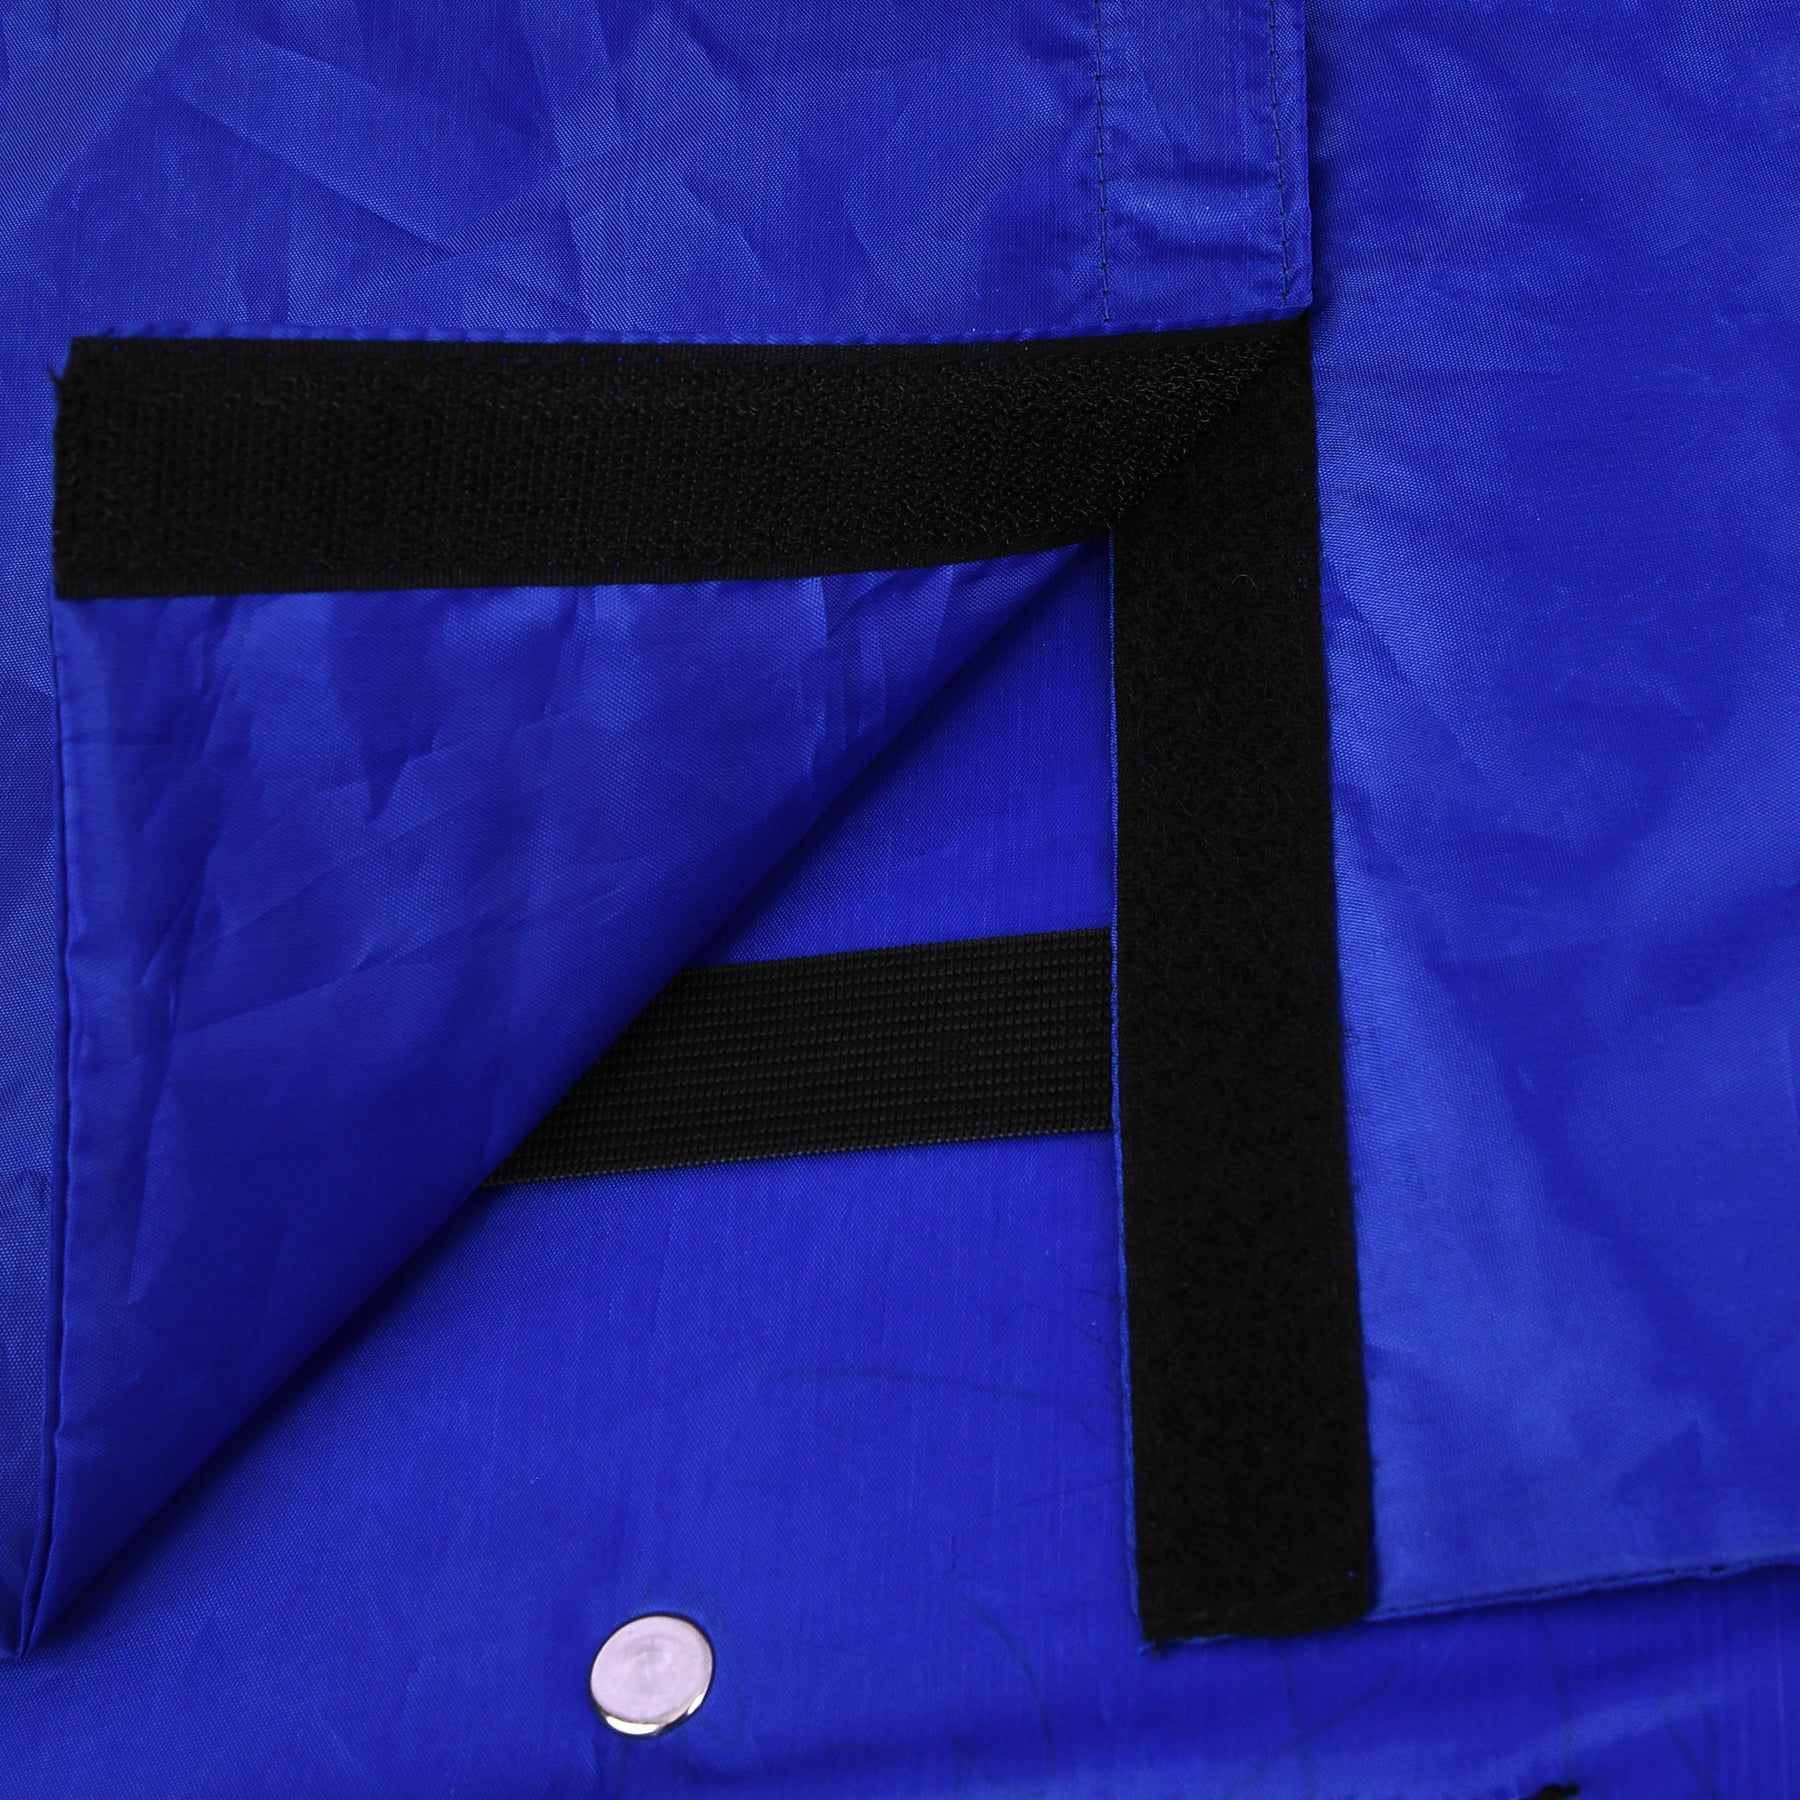 Master Mason Blue Lodge Apron Case - Soft Imitation Leather With Silver Metal Lock - Bricks Masons